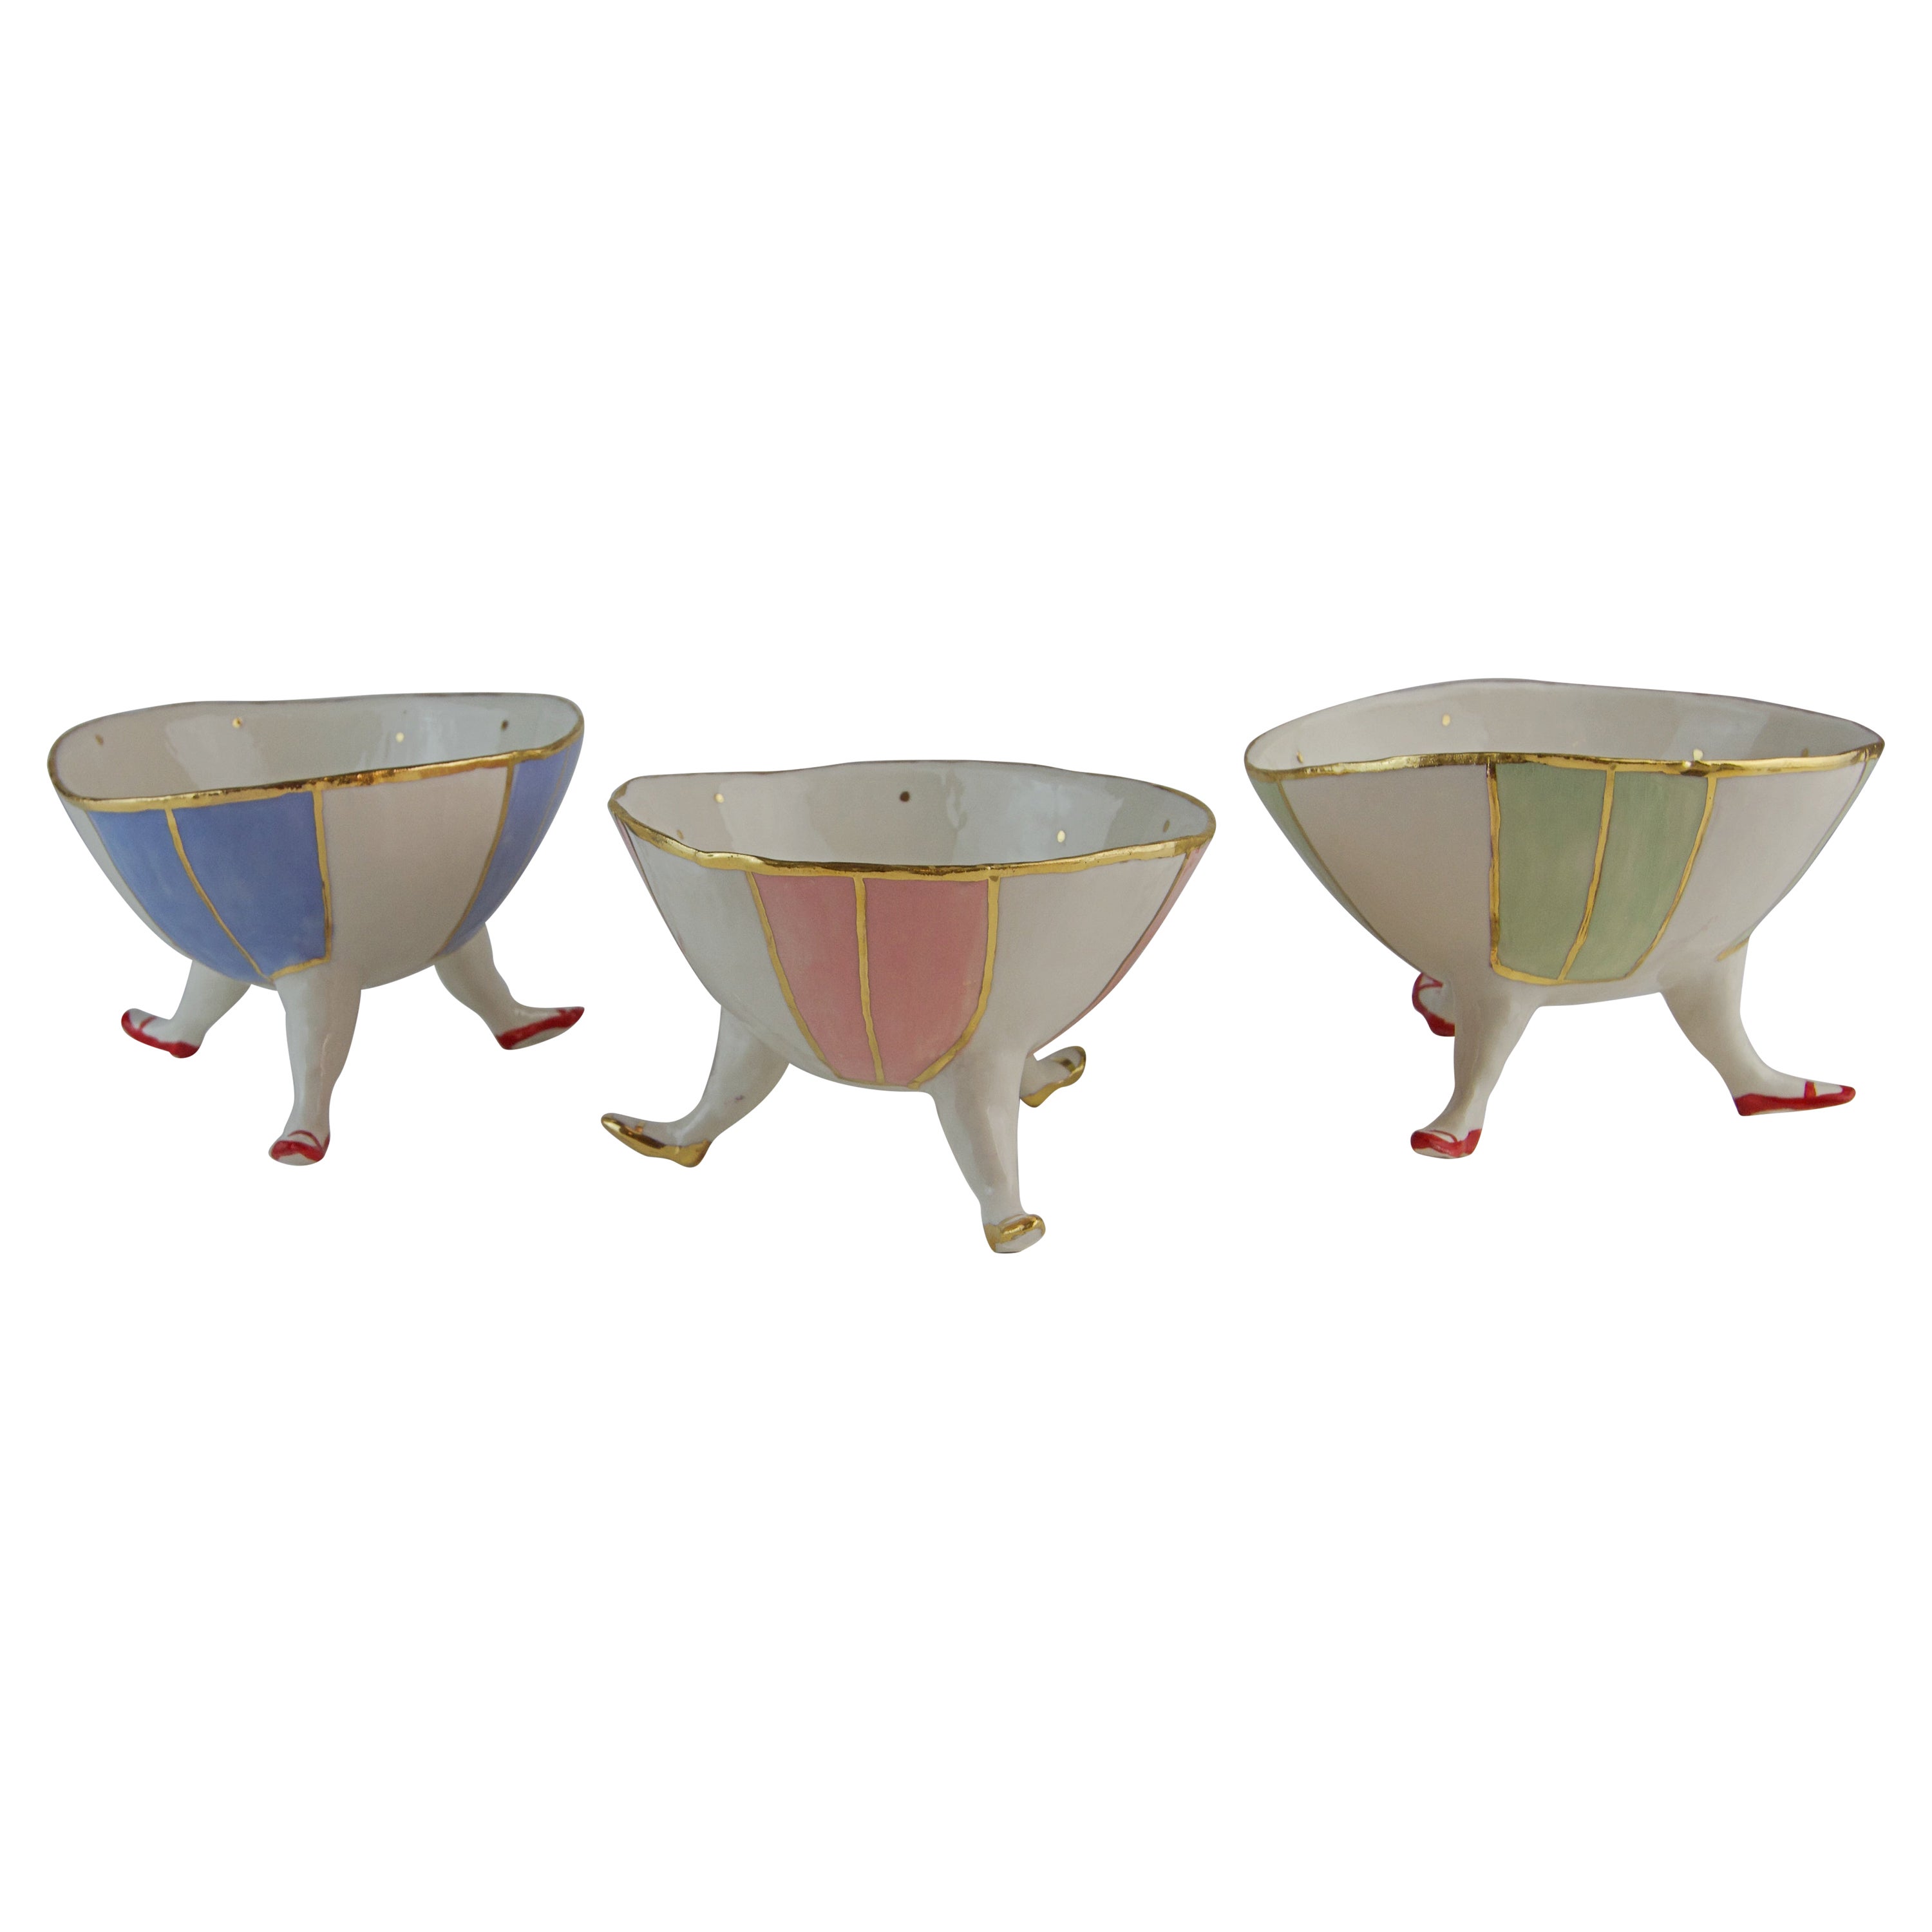 Alice in Wonderland Bowls, Handmade in Italy, Luxury Gold Design, 2021